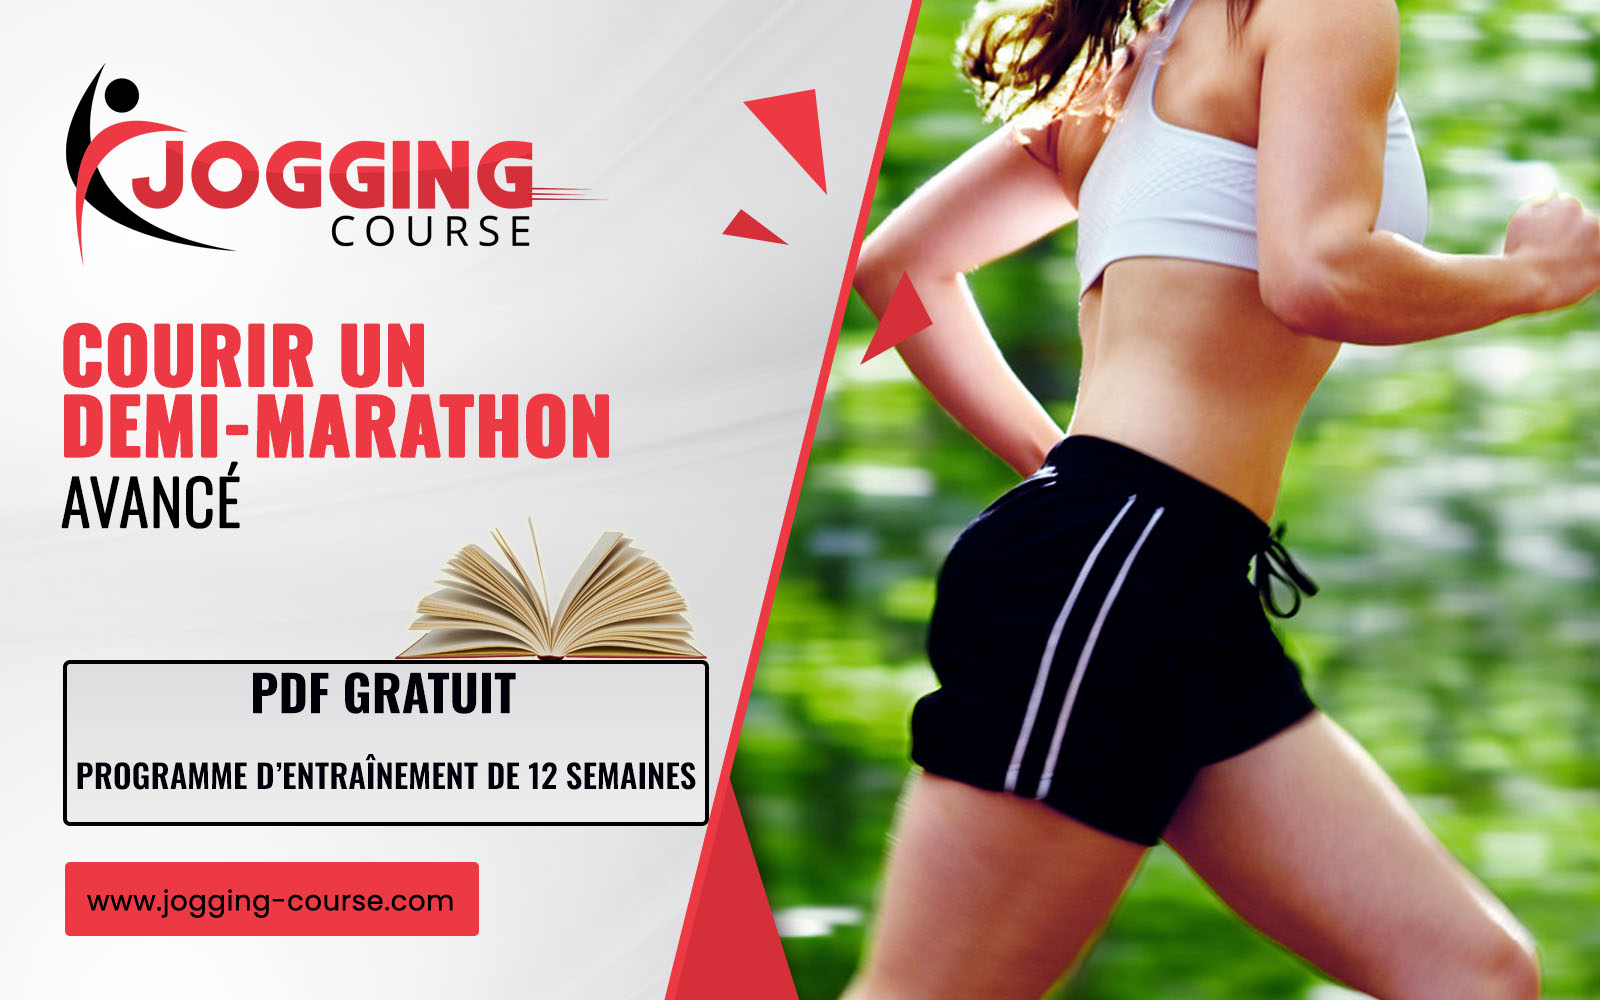 Programme demi-marathon (21.1 km) : Débutant avancé